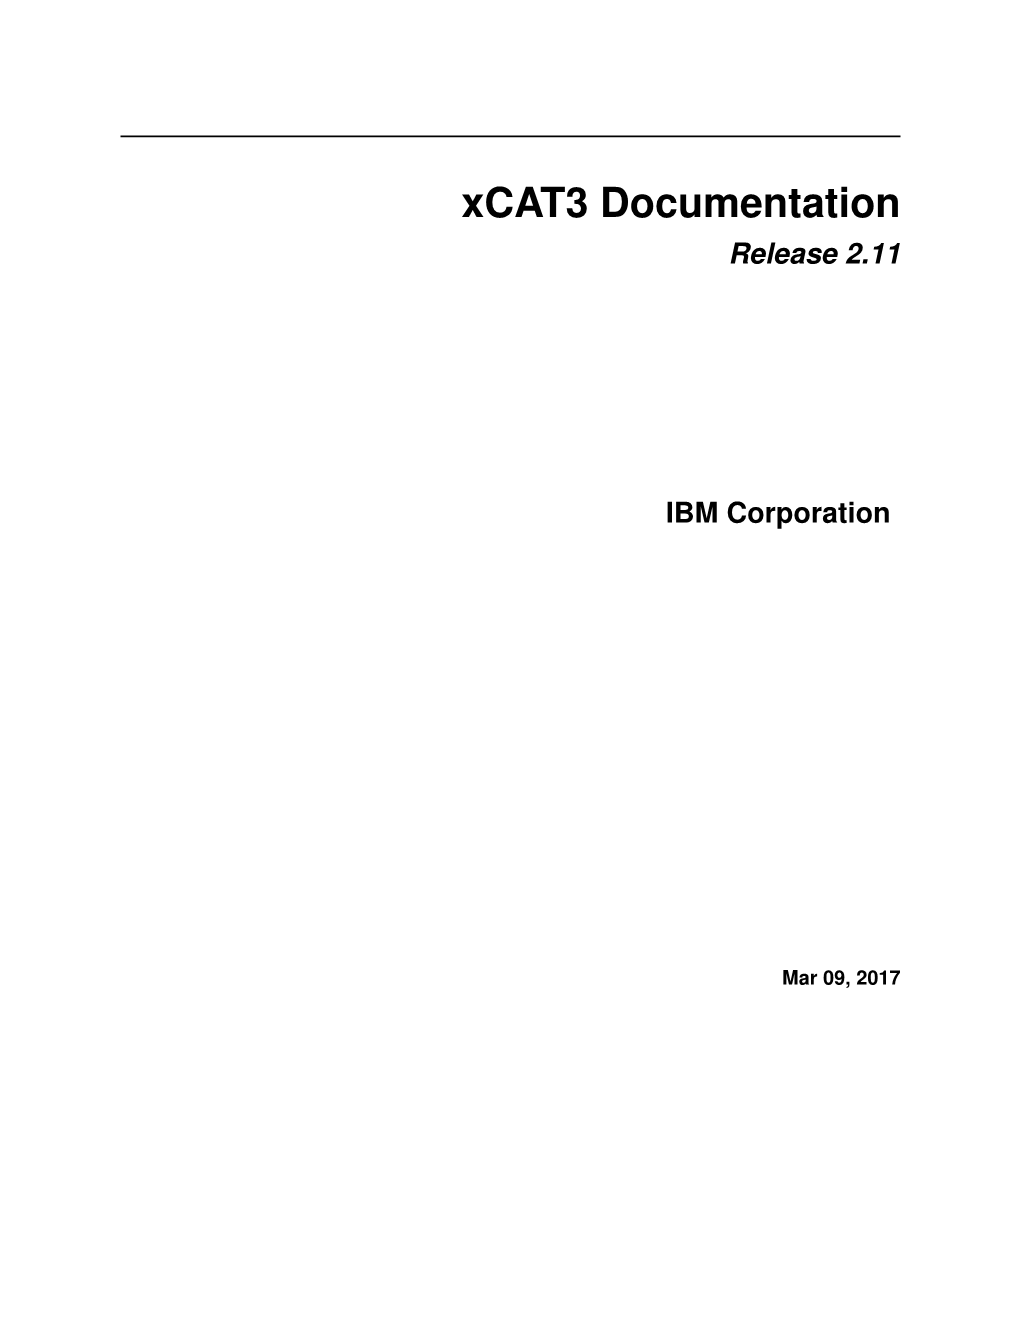 Xcat3 Documentation Release 2.11